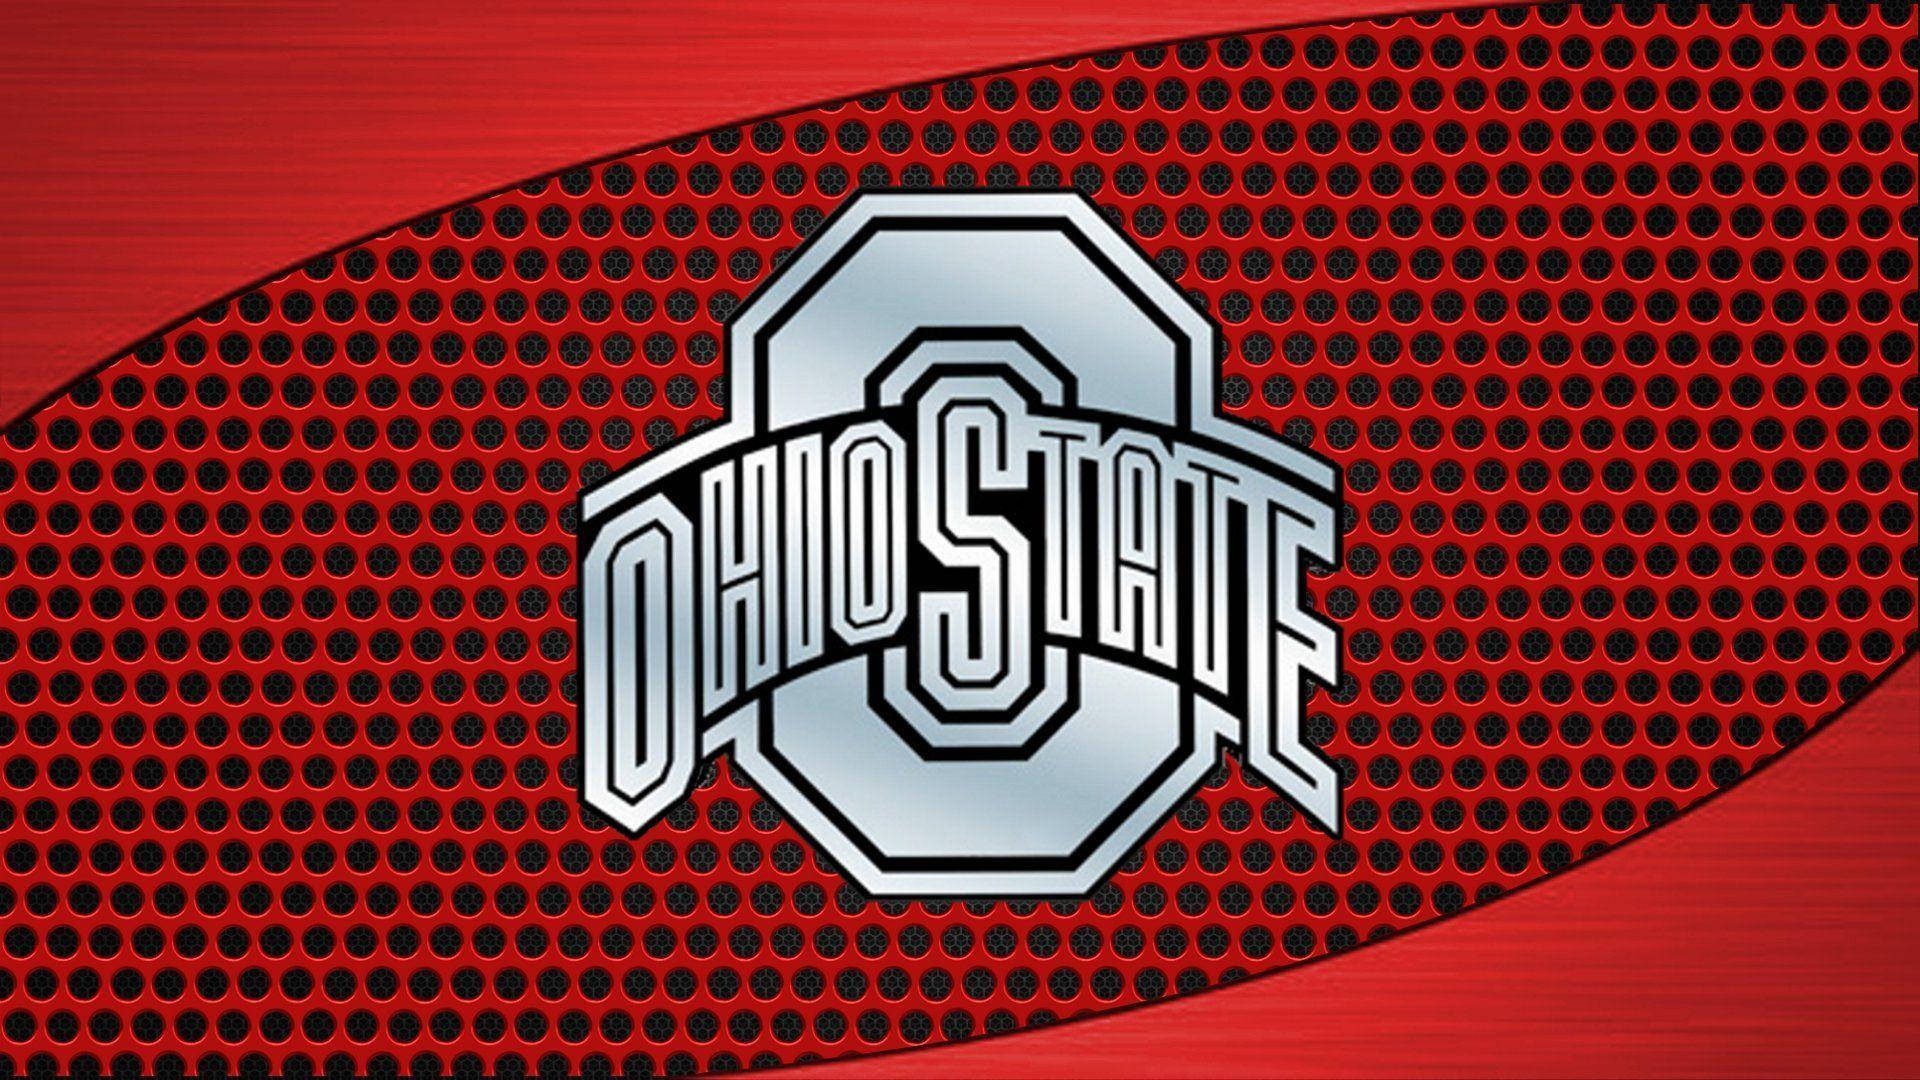 Ohio State University Spotted Pattern Wallpaper